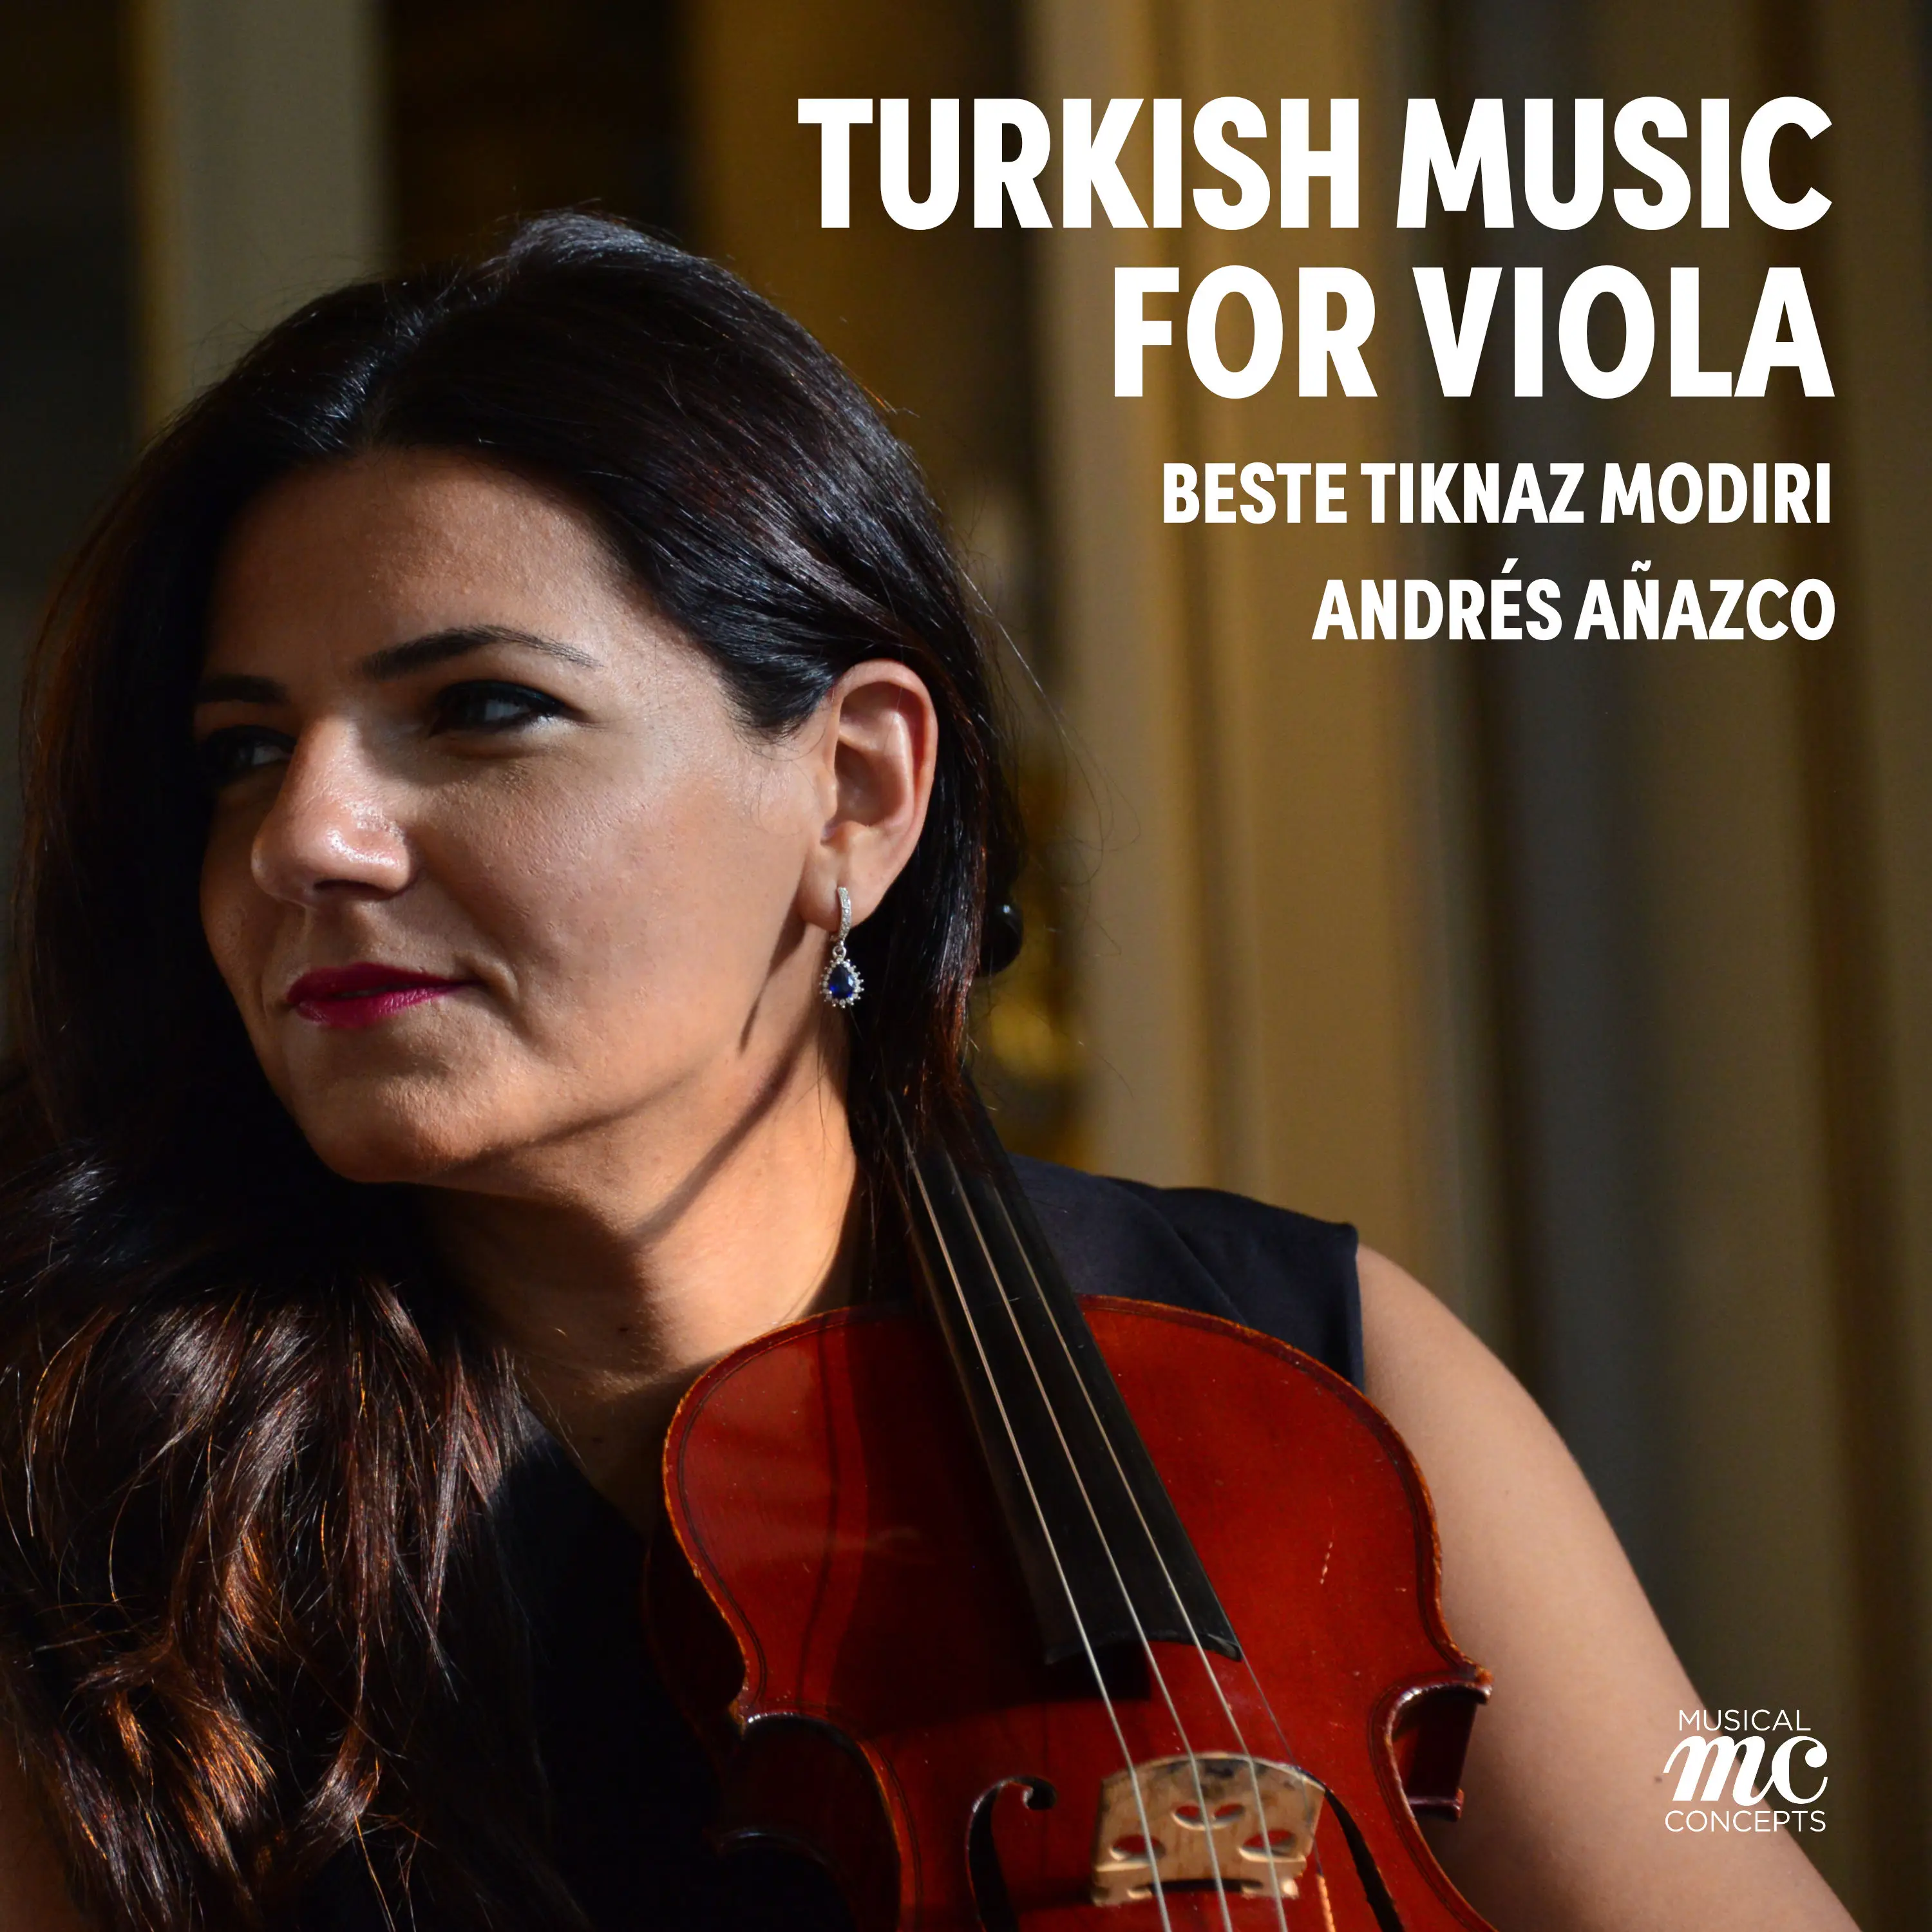 Слушать лучшую турецкую музыку. Турецкая музыка. Turk Music 2021. Турецкая музыка красивая. Турецкая музыка слушать.